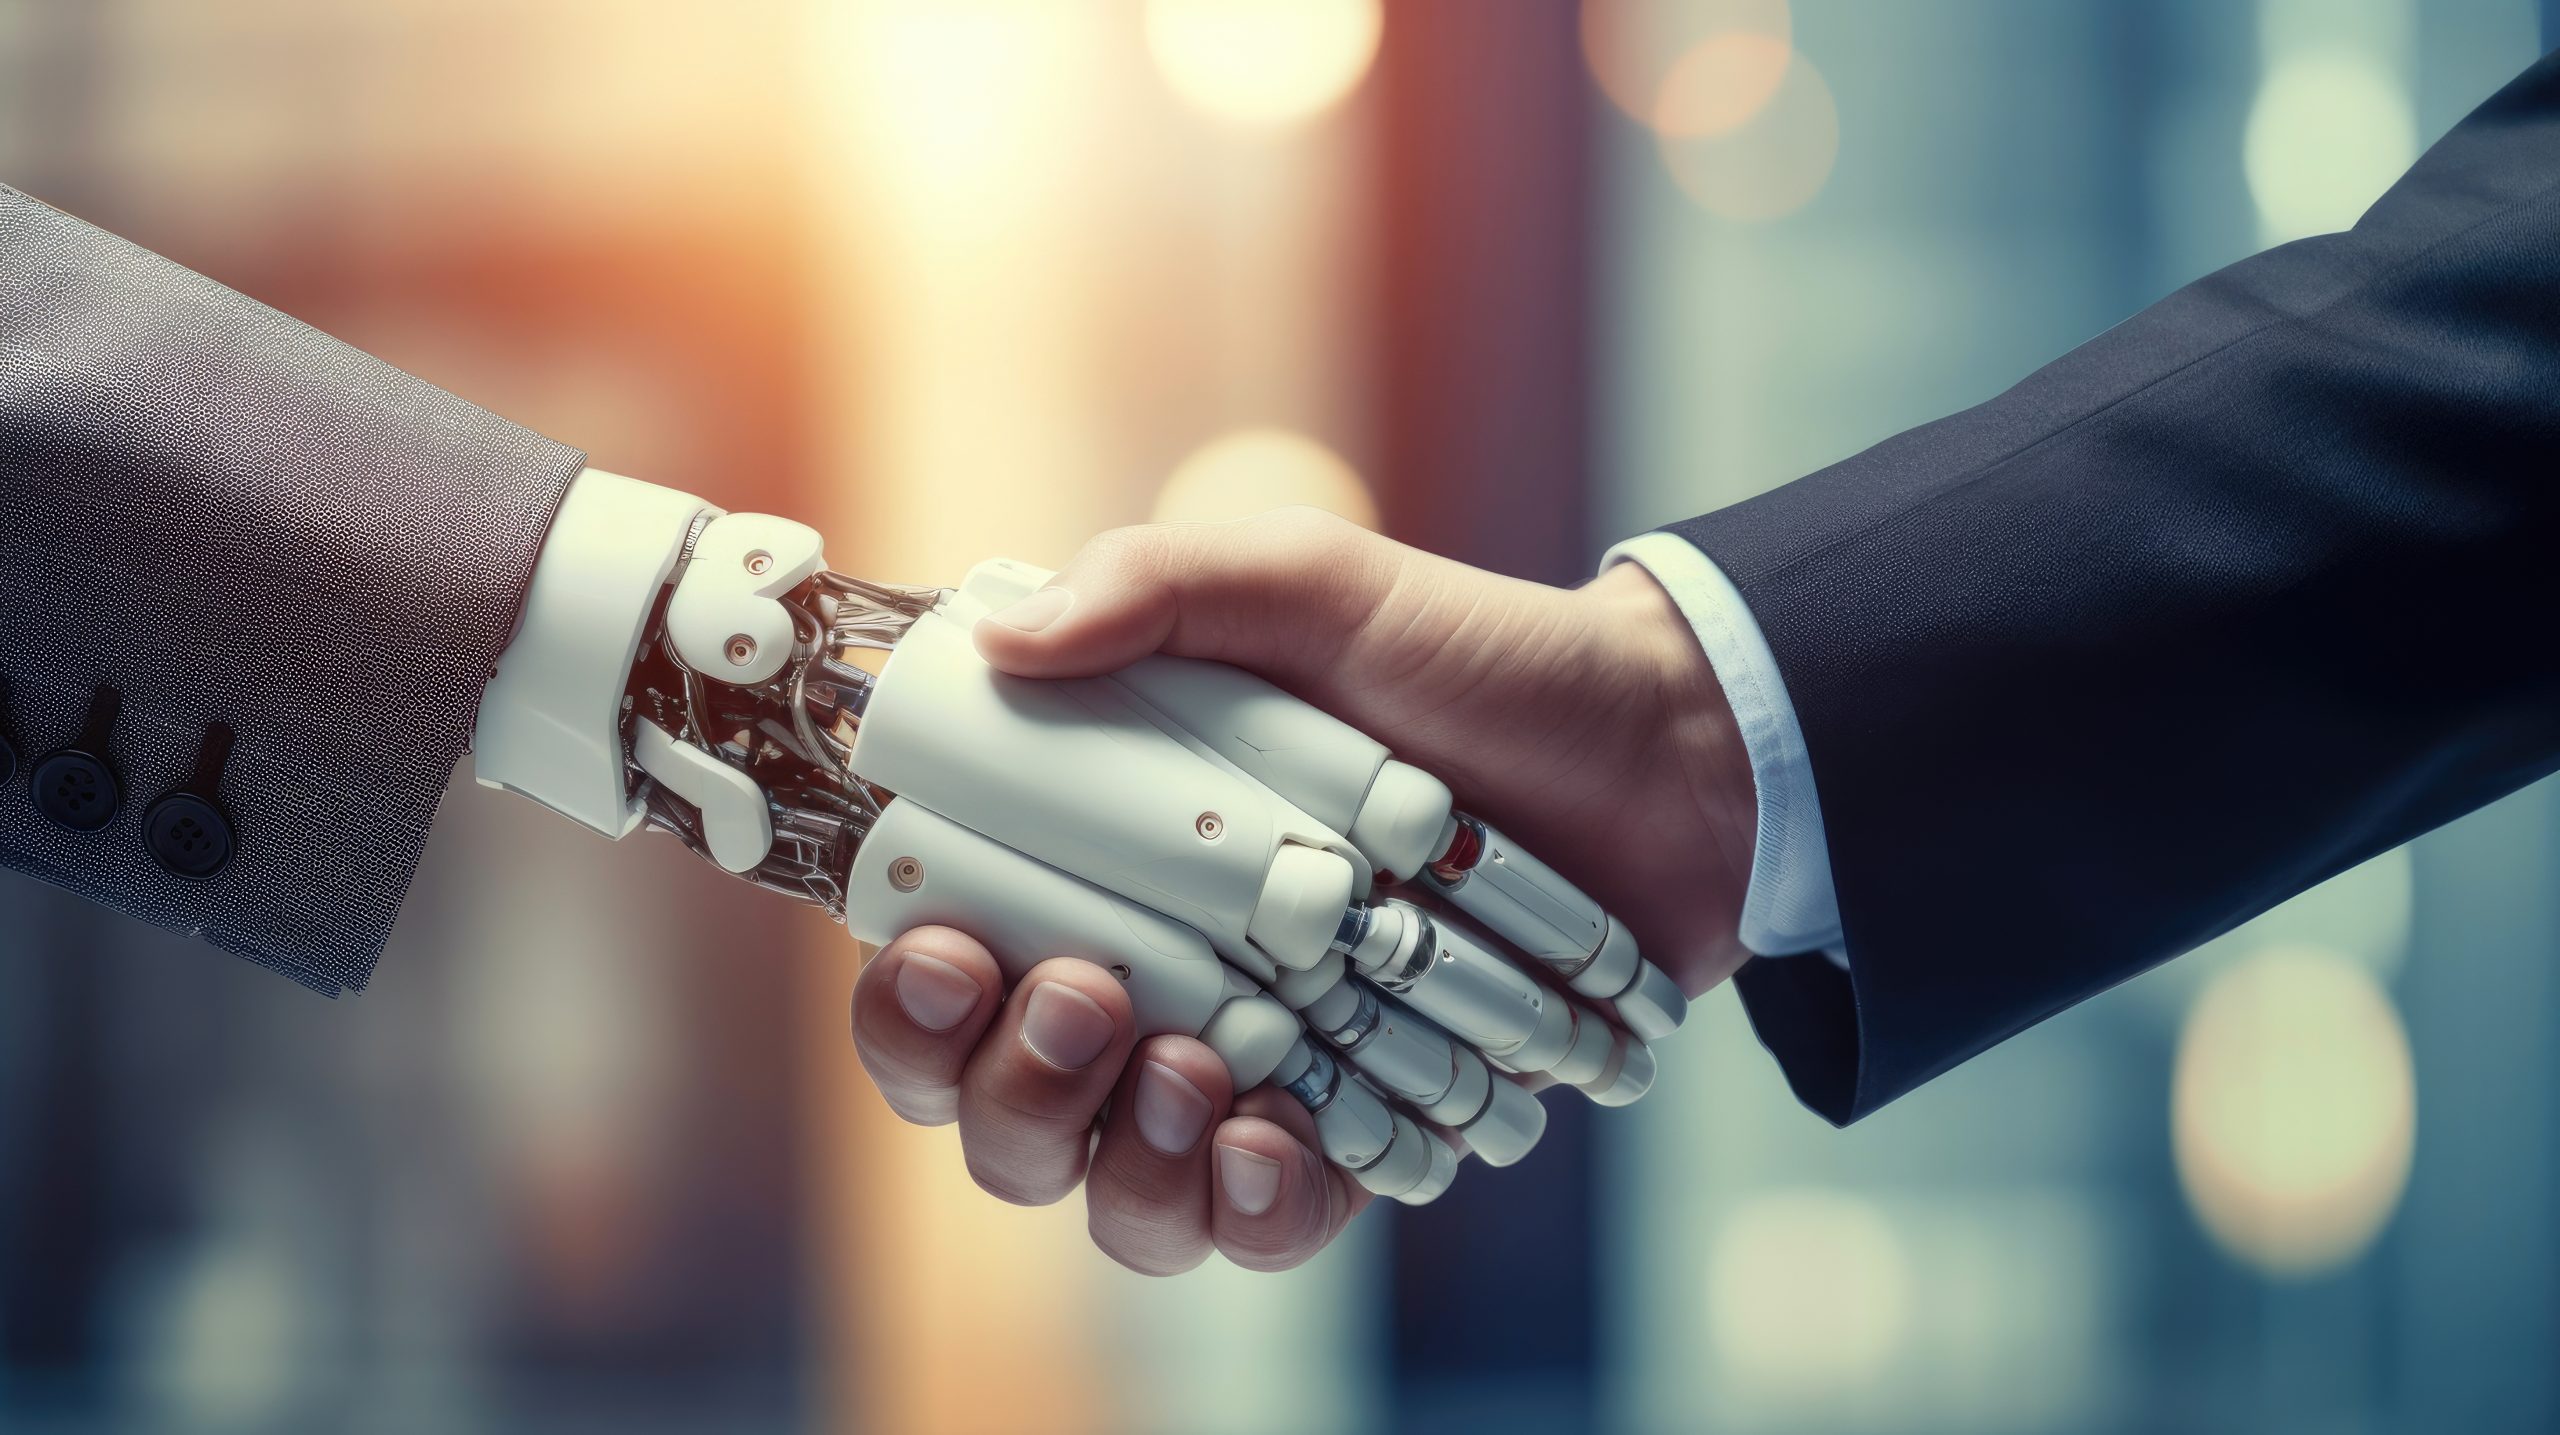 The Robotic Handshake of Business Minds